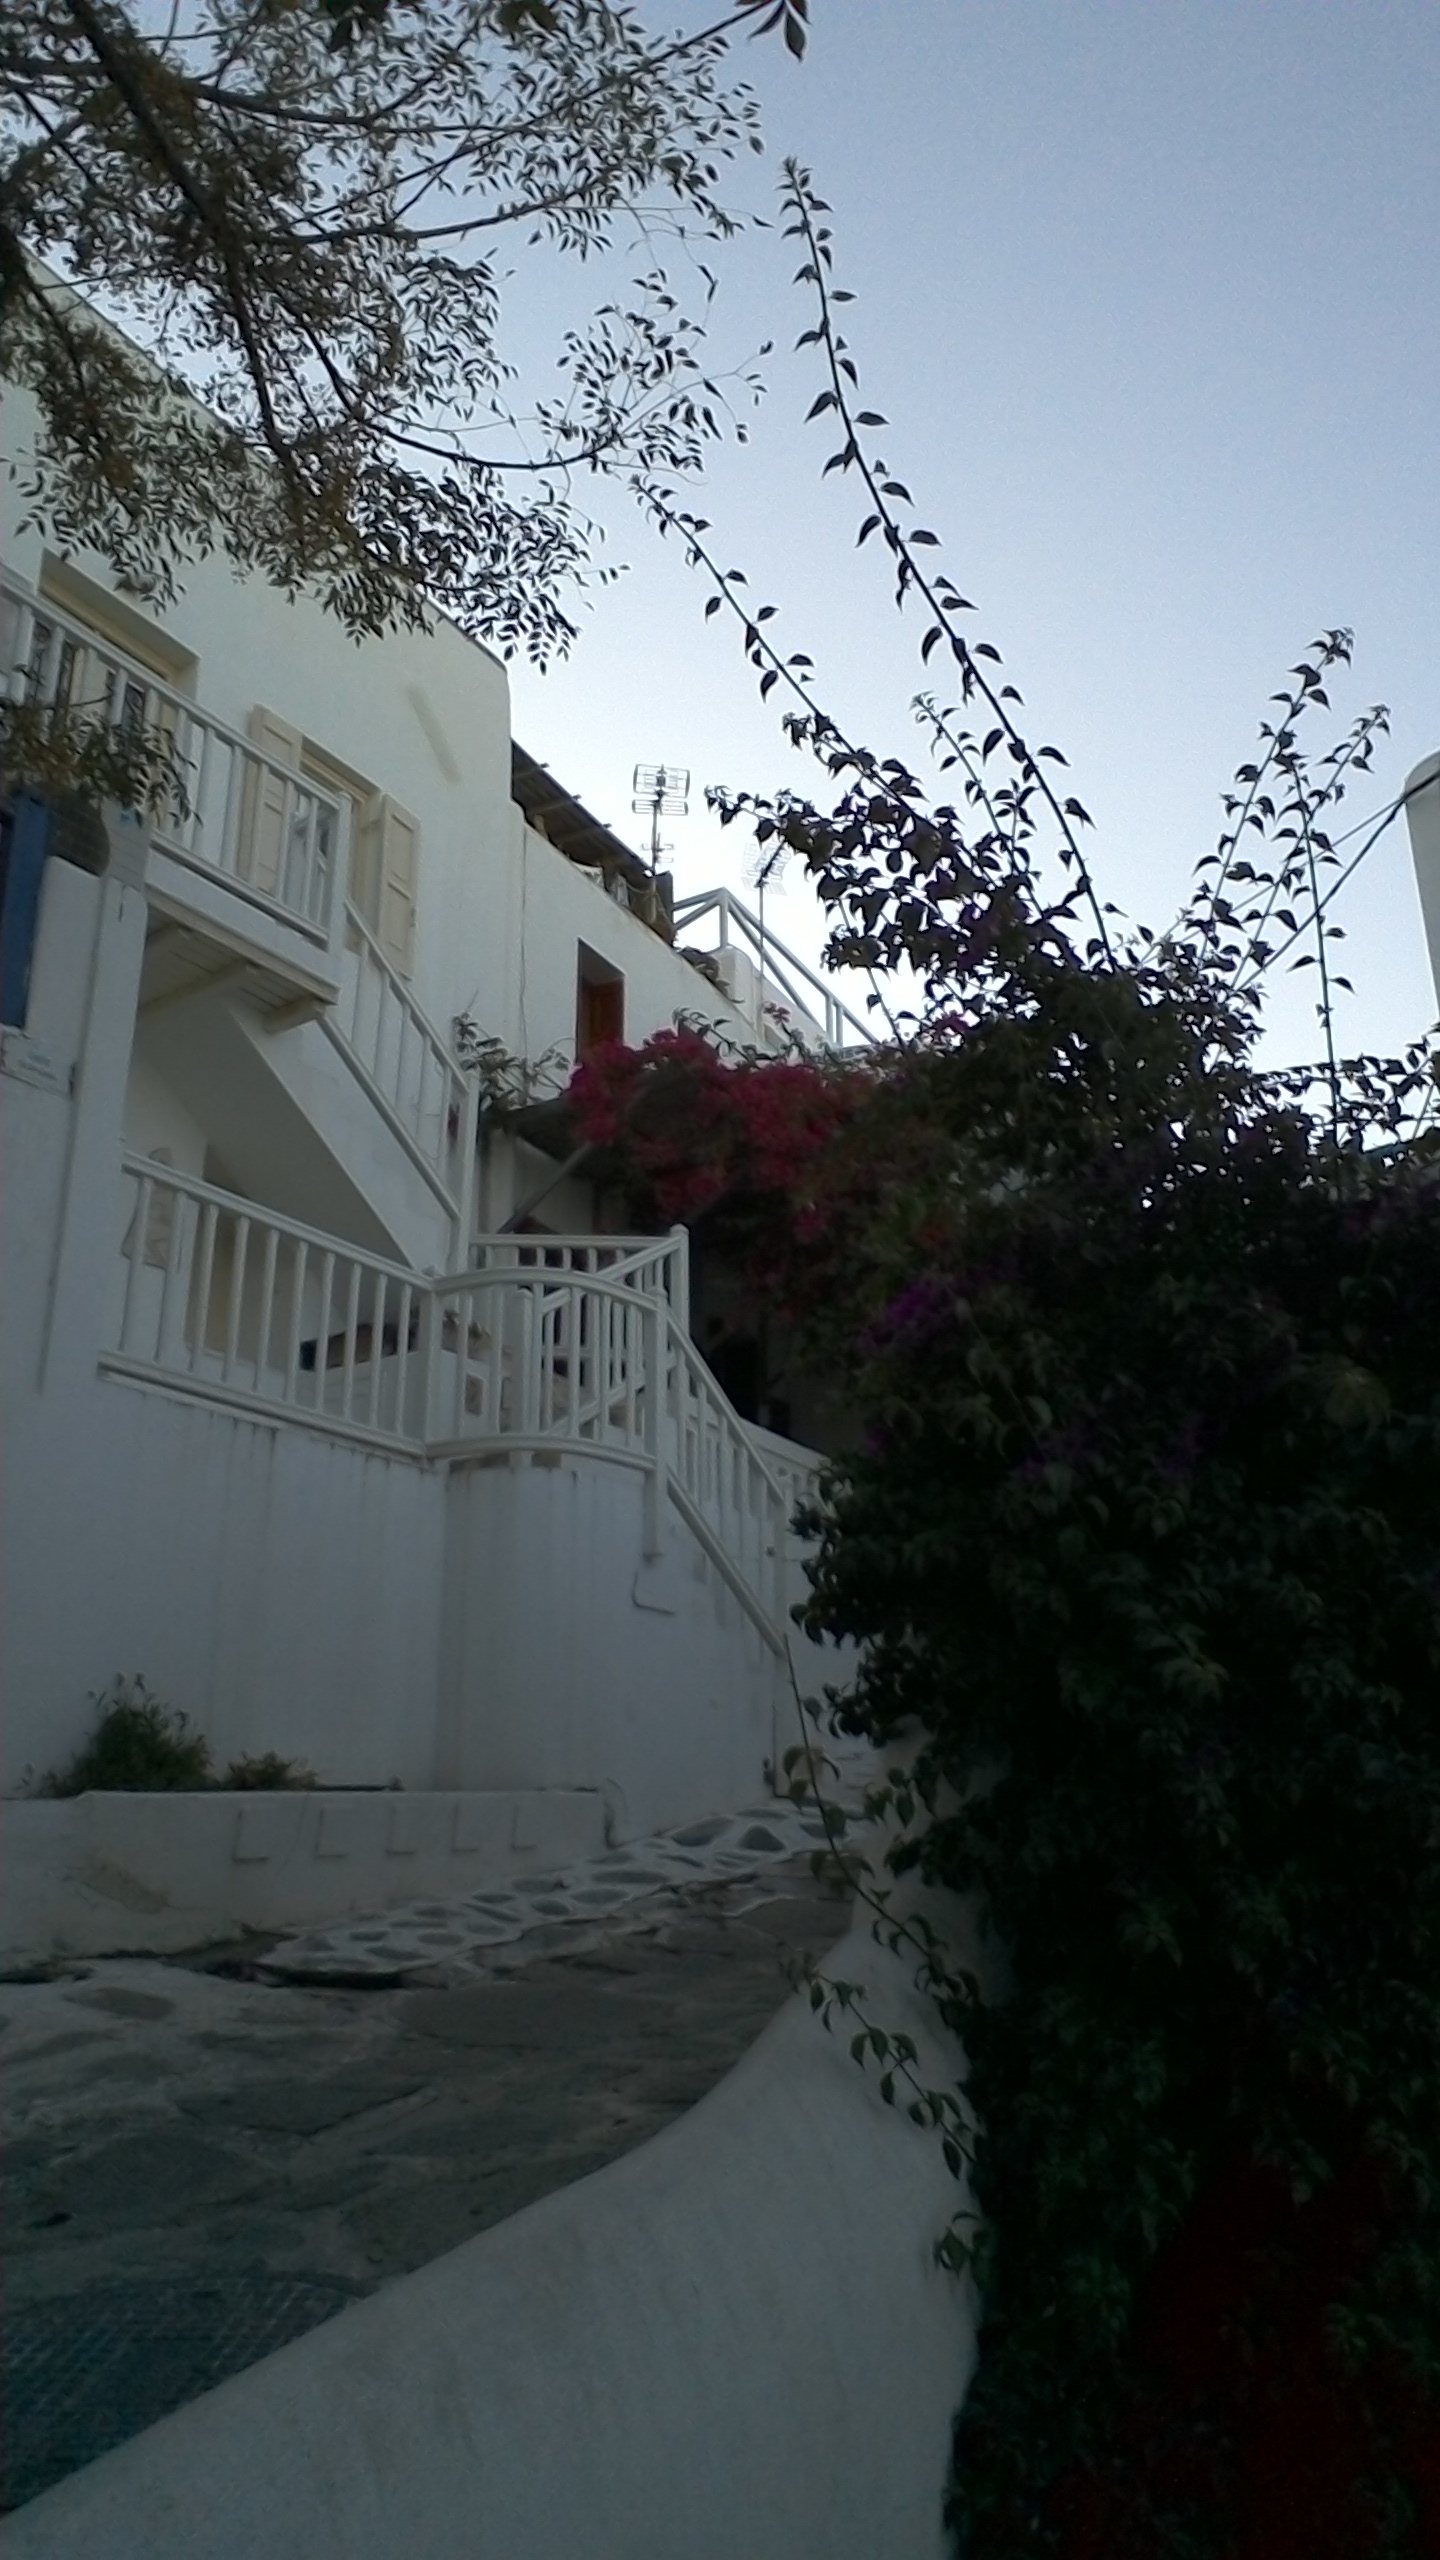 Streets of Mykonos